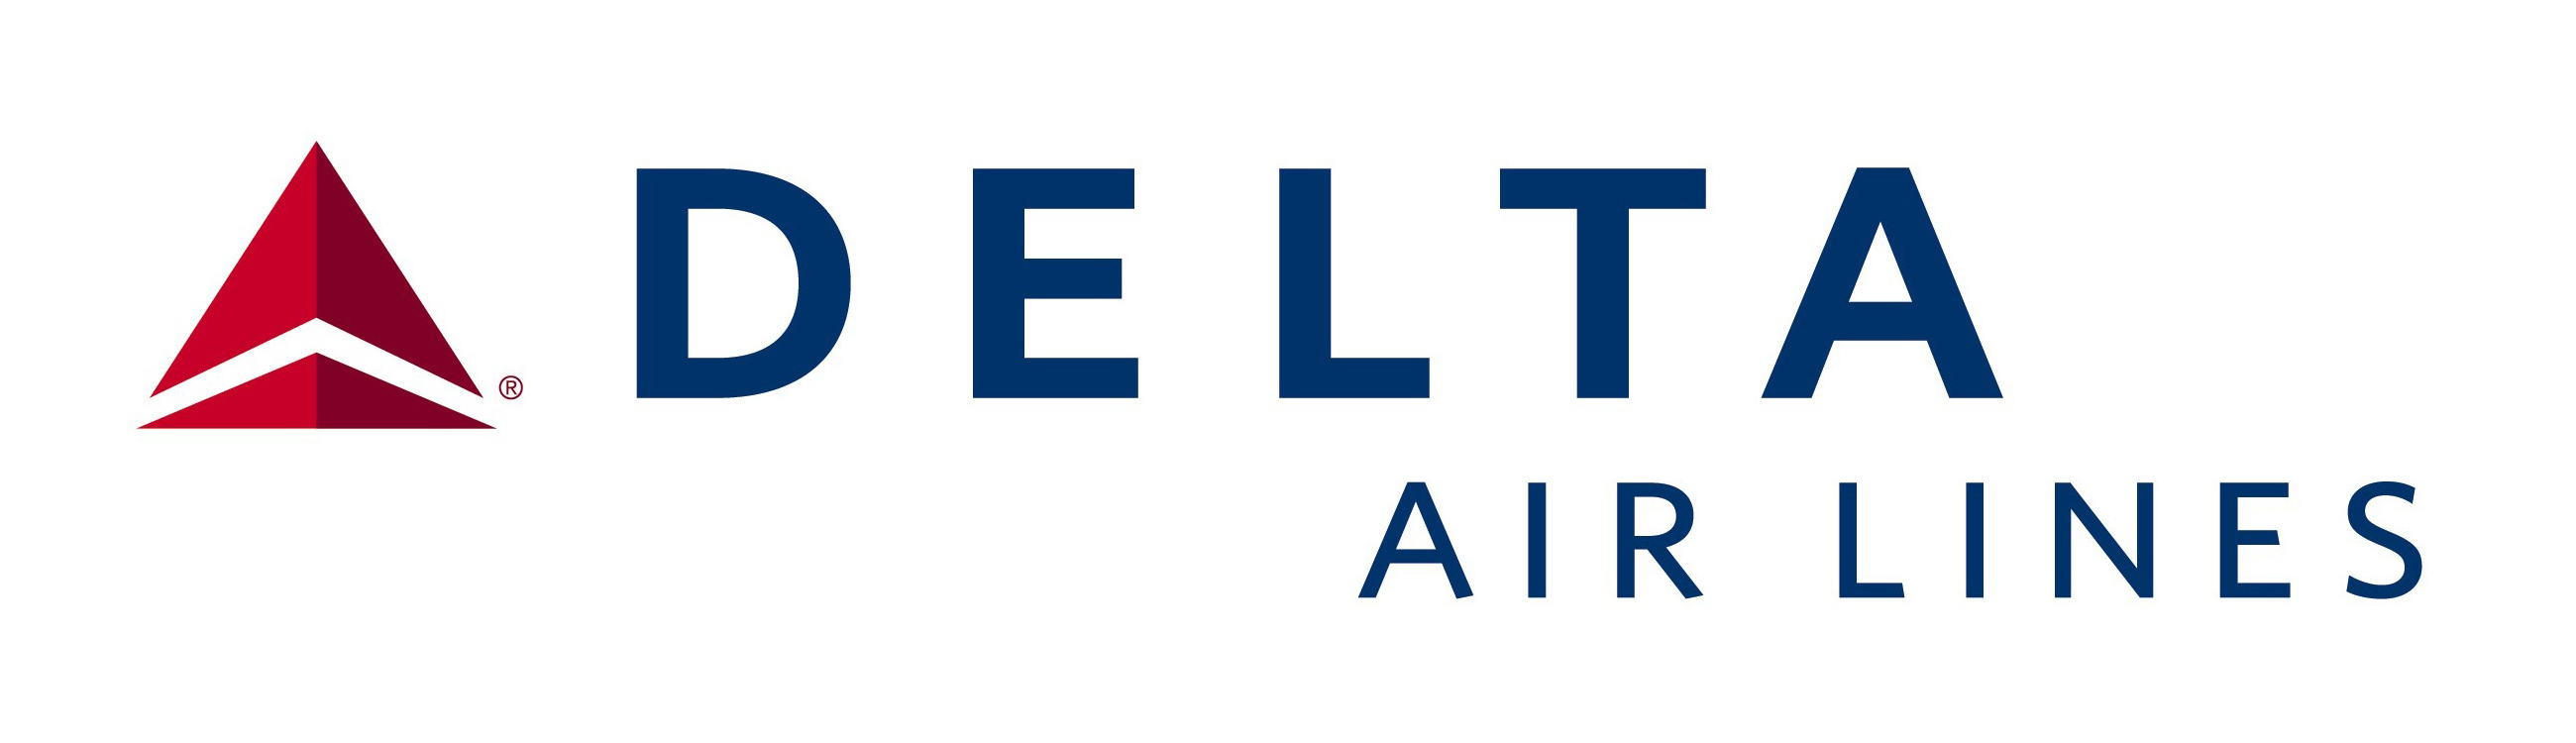 Delta Airlines Logo PNG - 177271